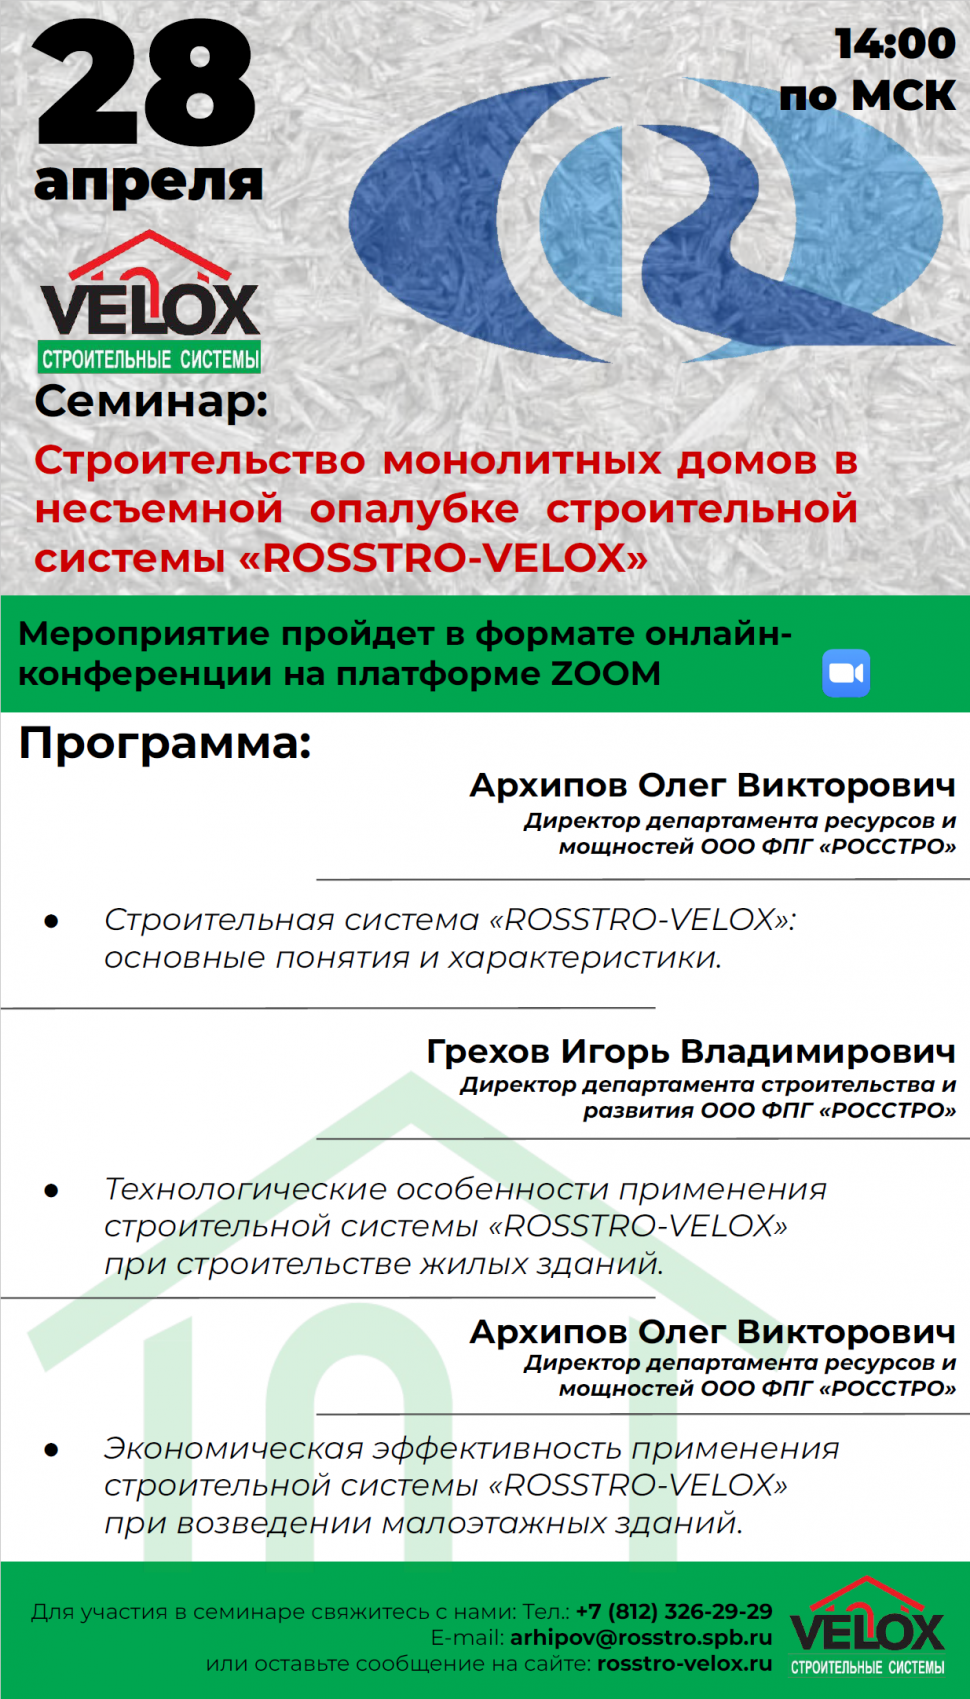 /content/velox/image/seminar_28_aprelya_tsel.png